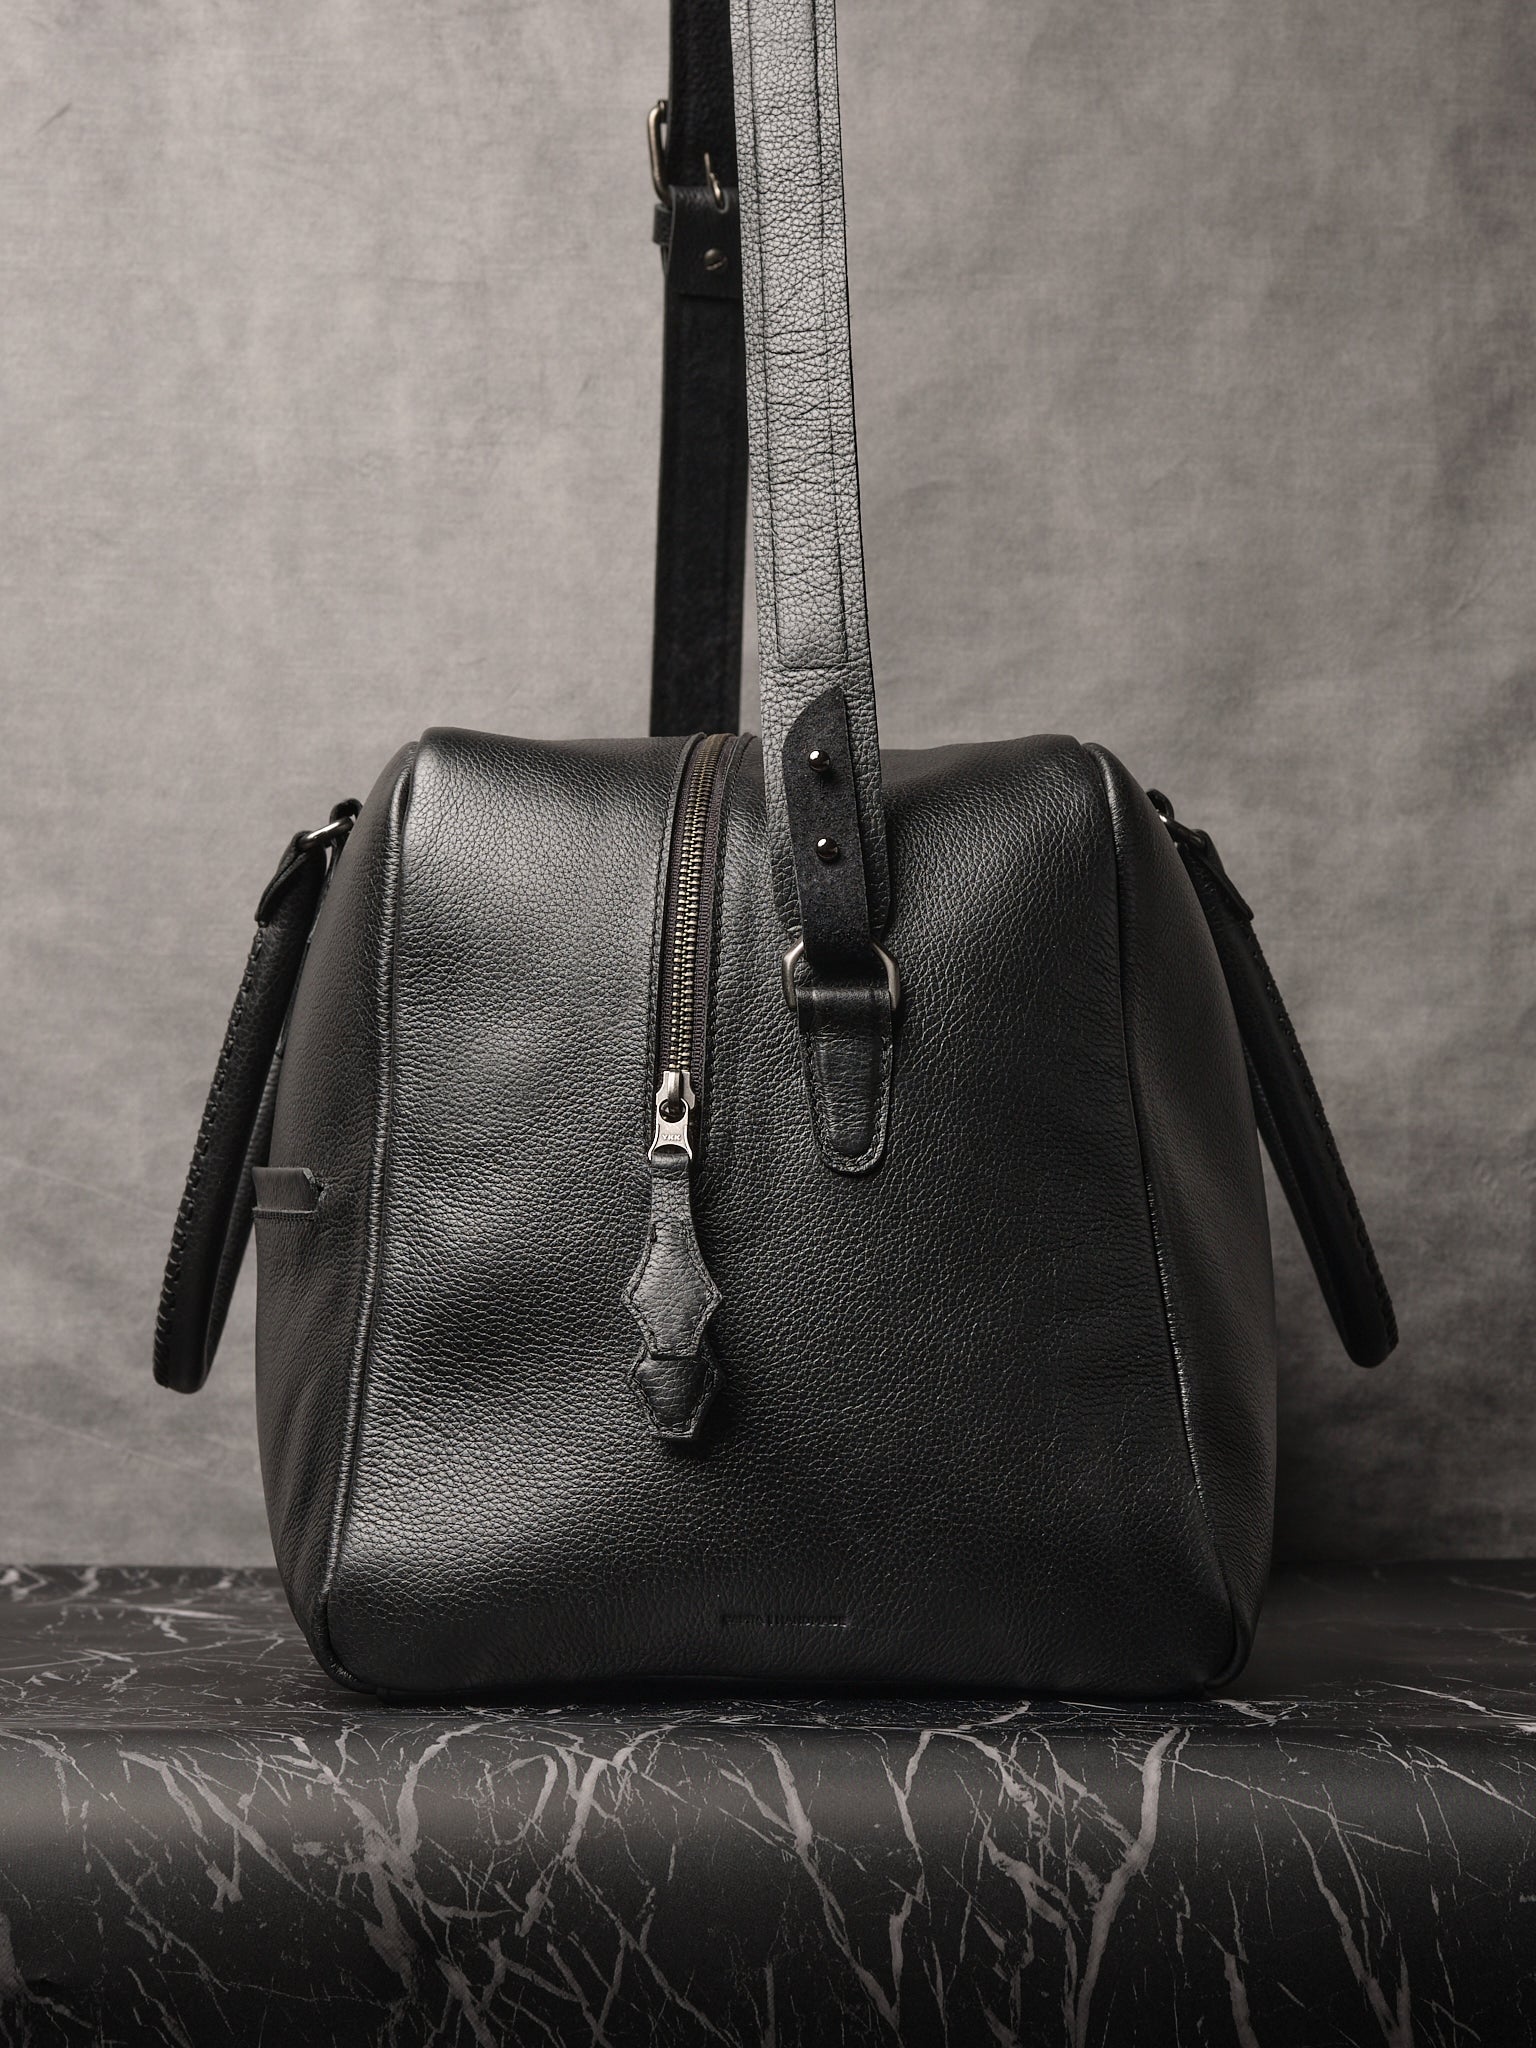 Removable Shoulder Strap. Mens Duffle Bag Black by Capra Leather